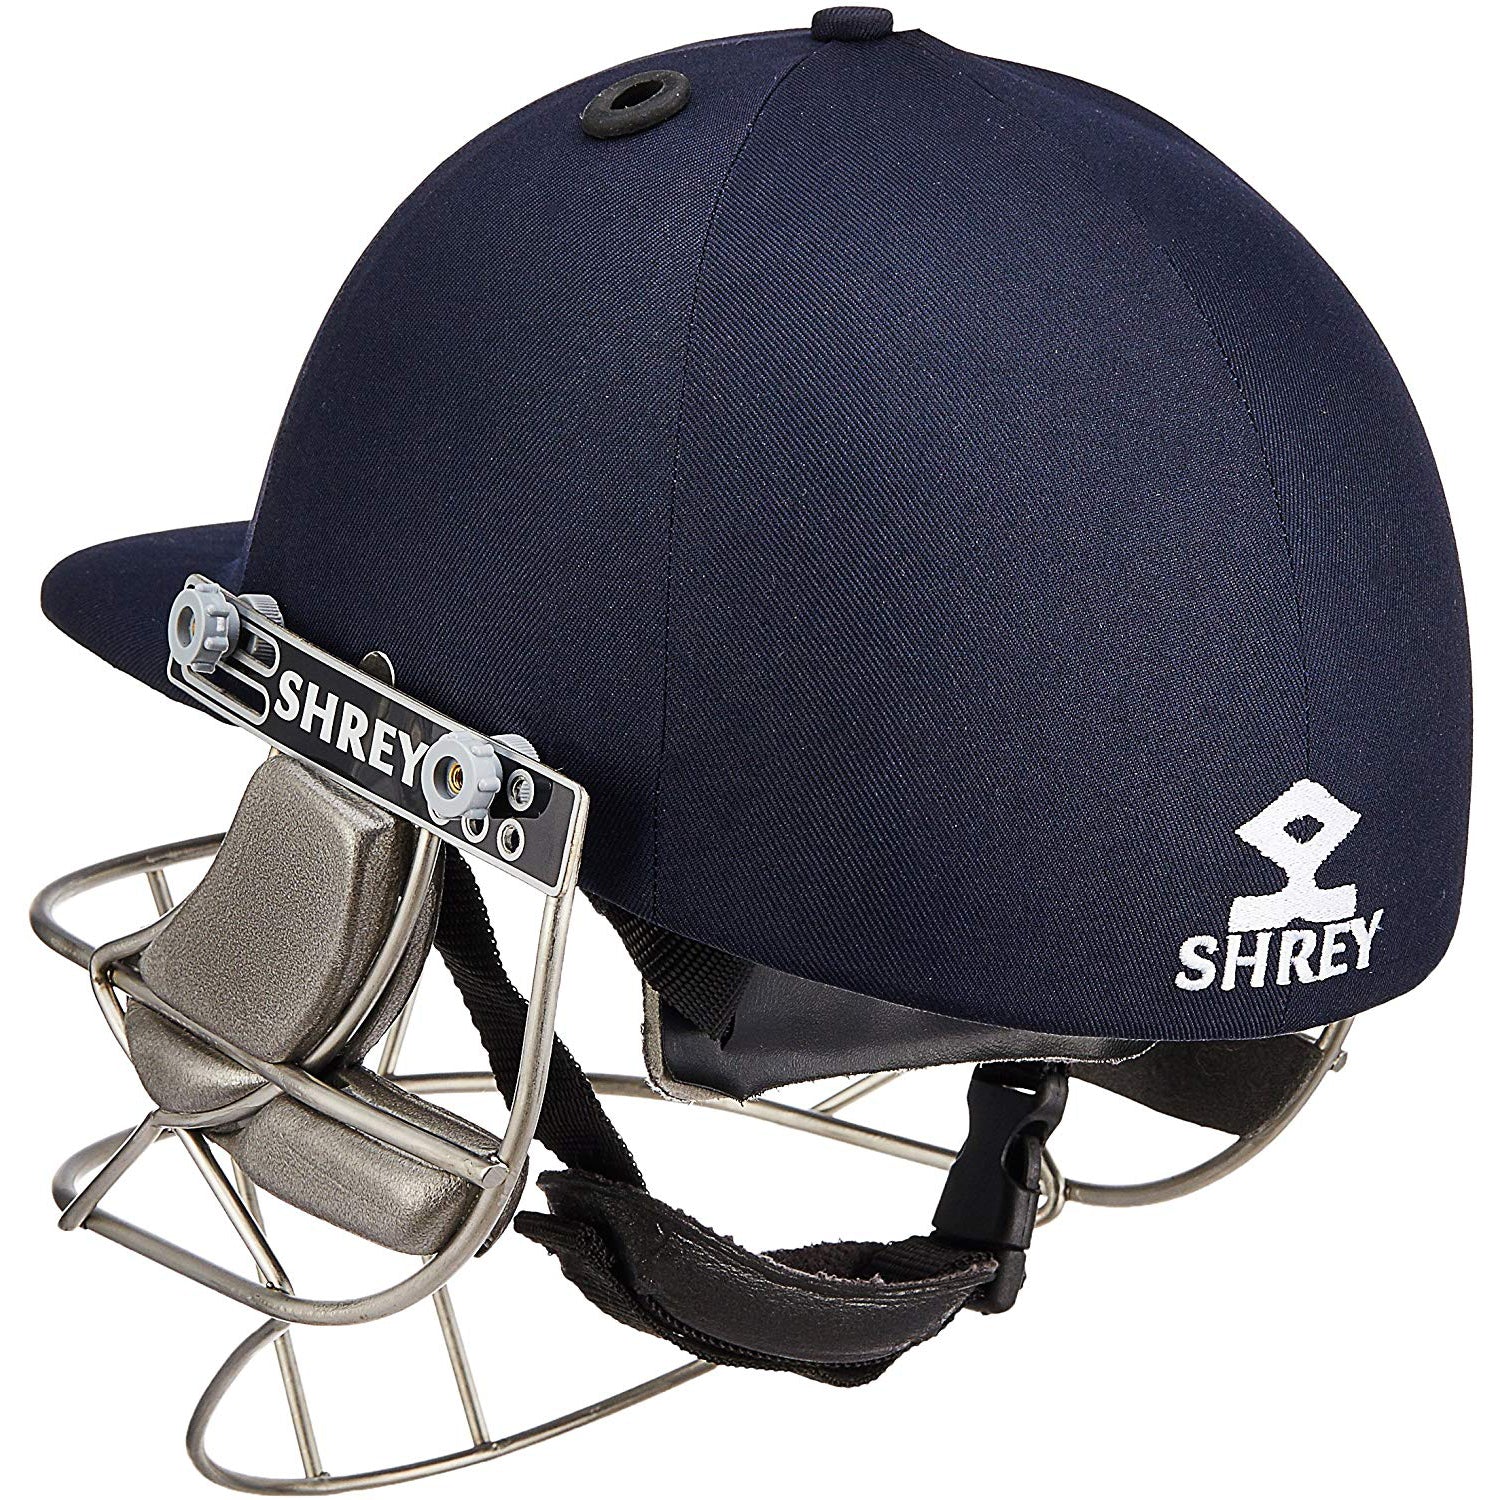 Shrey Pro Guard with Titanium Visor Cricket Helmet - Best Price online Prokicksports.com